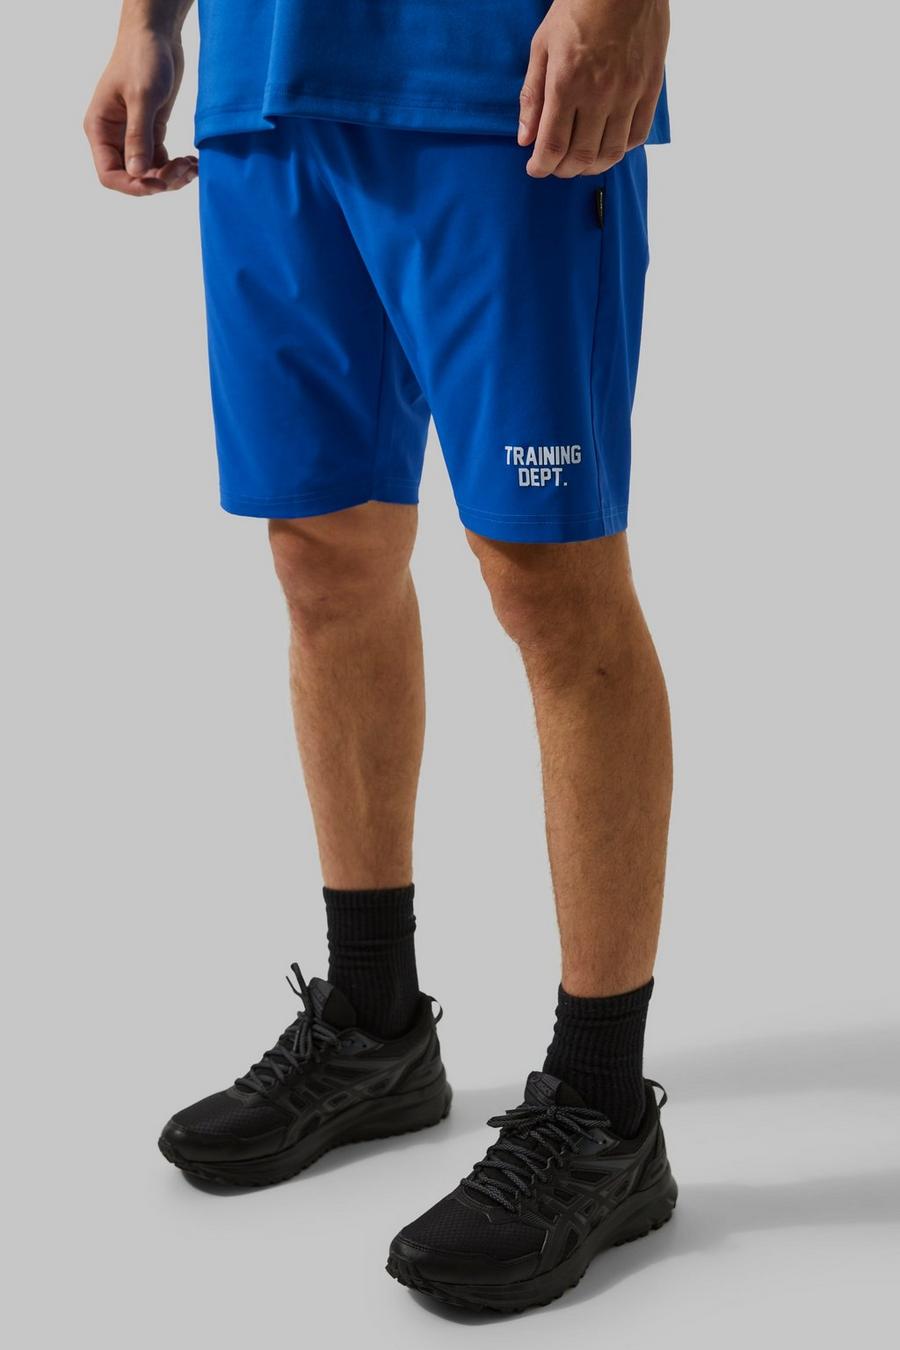 Pantalón corto Tall MAN Active resistente Training Dept, Cobalt azzurro